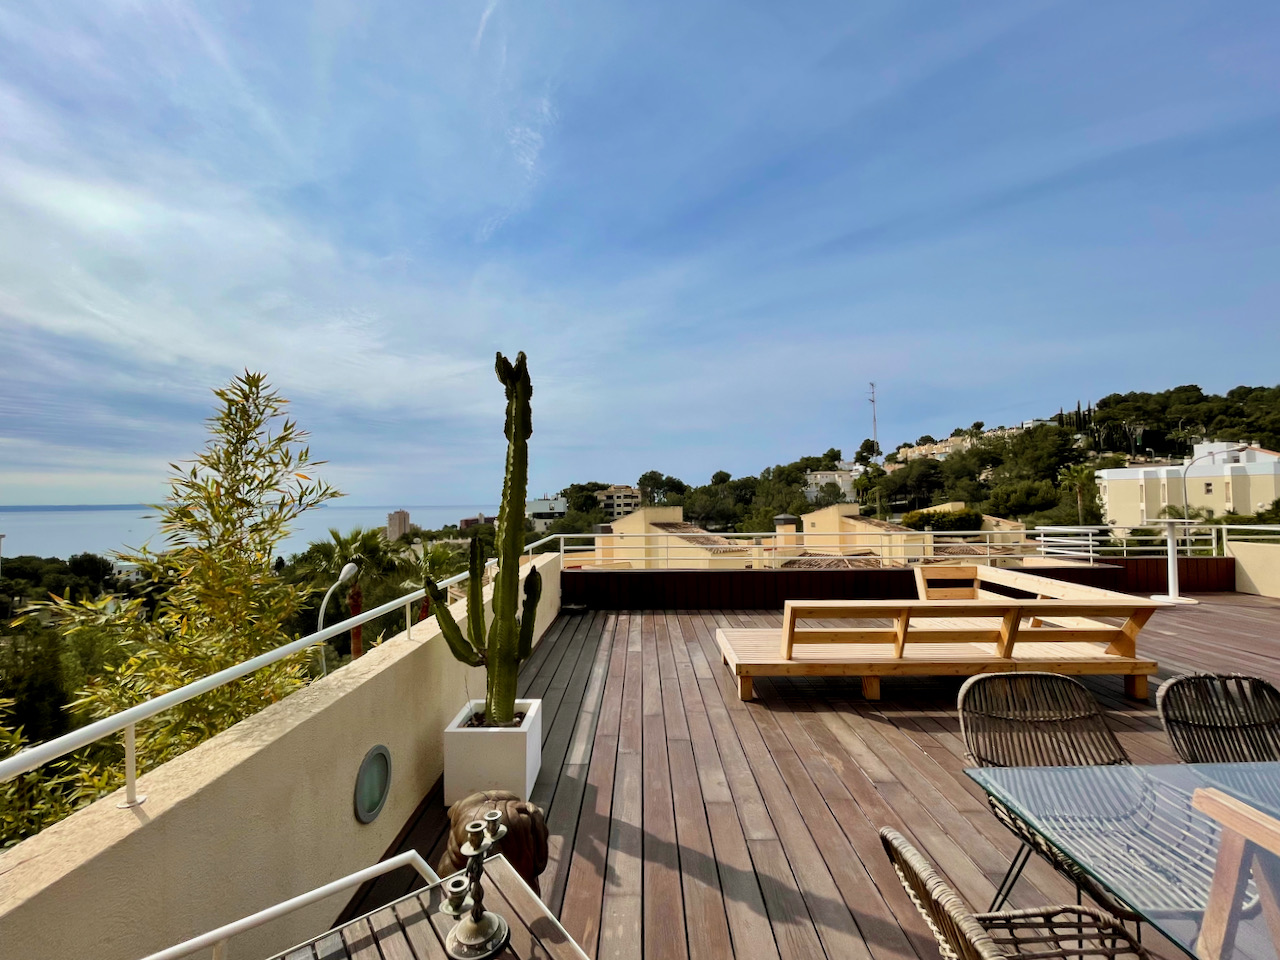 Flat met zeezicht en terras in Cas Catala, Mallorca.